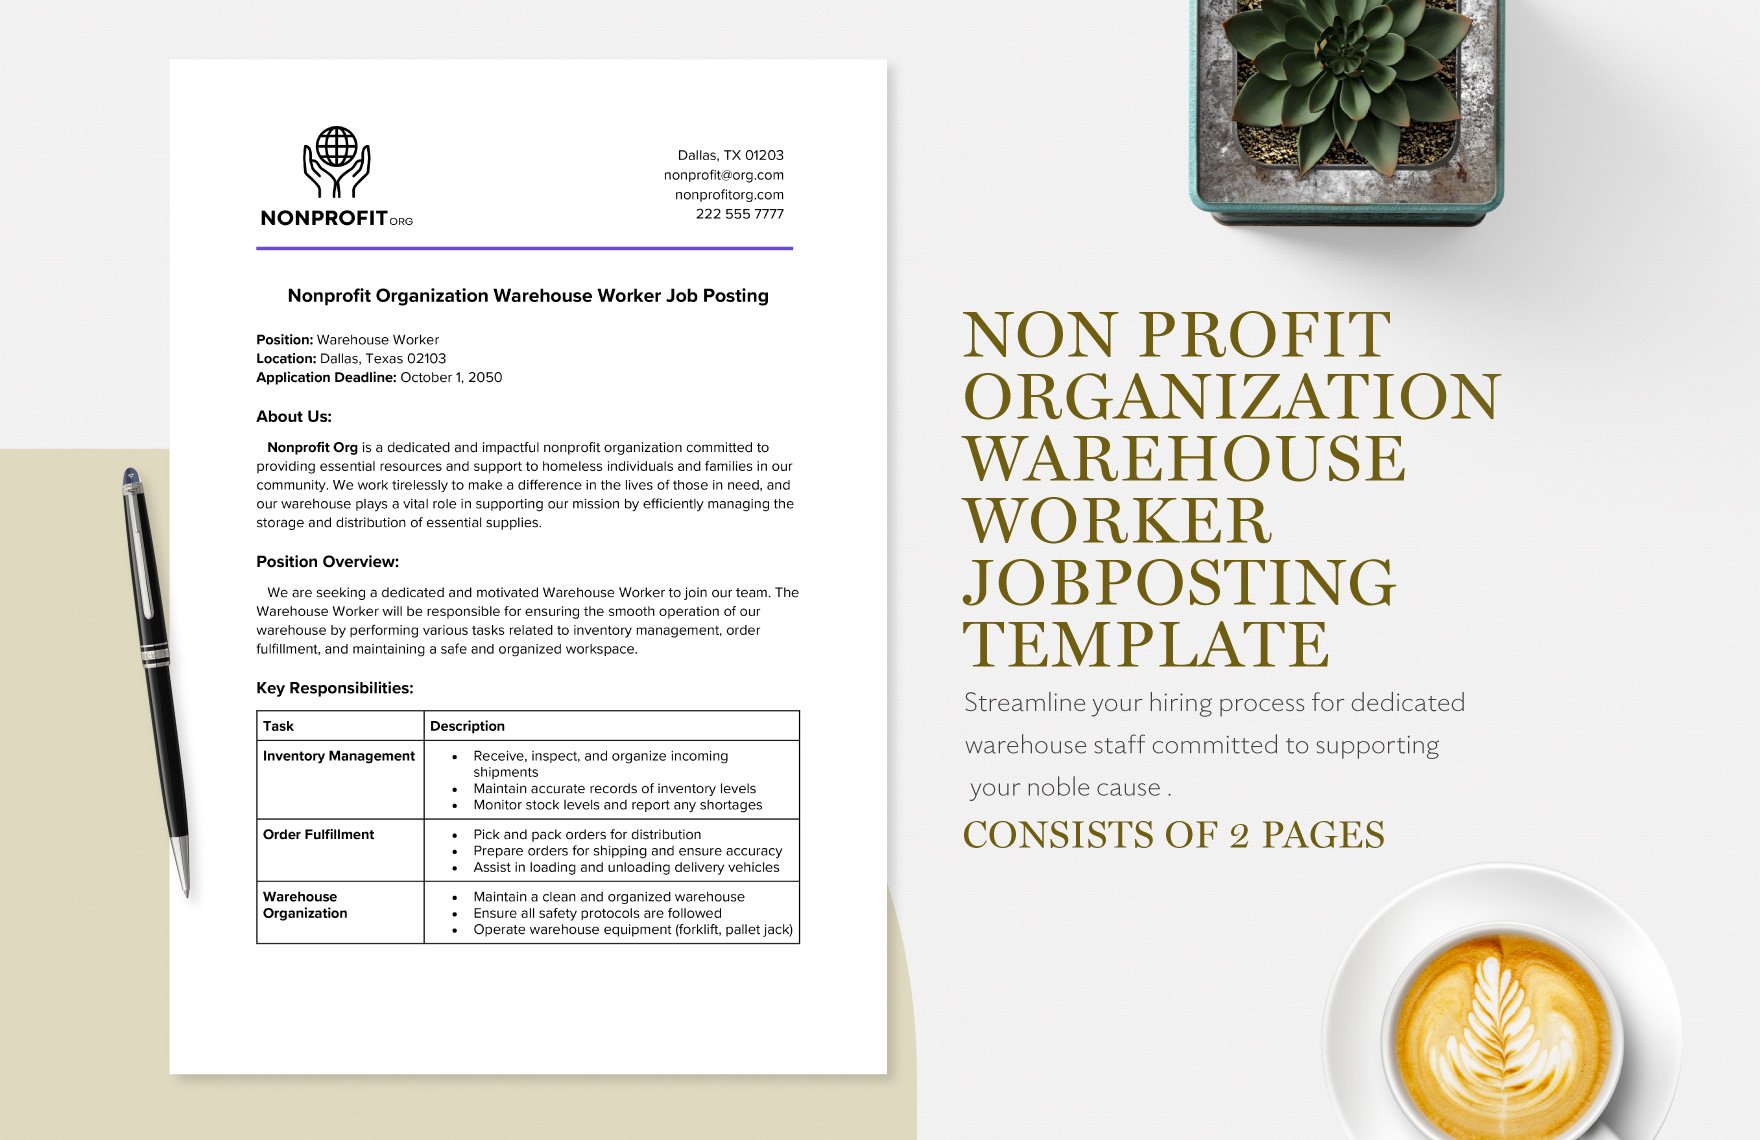 Nonprofit Organization Warehouse Worker Job Posting Template